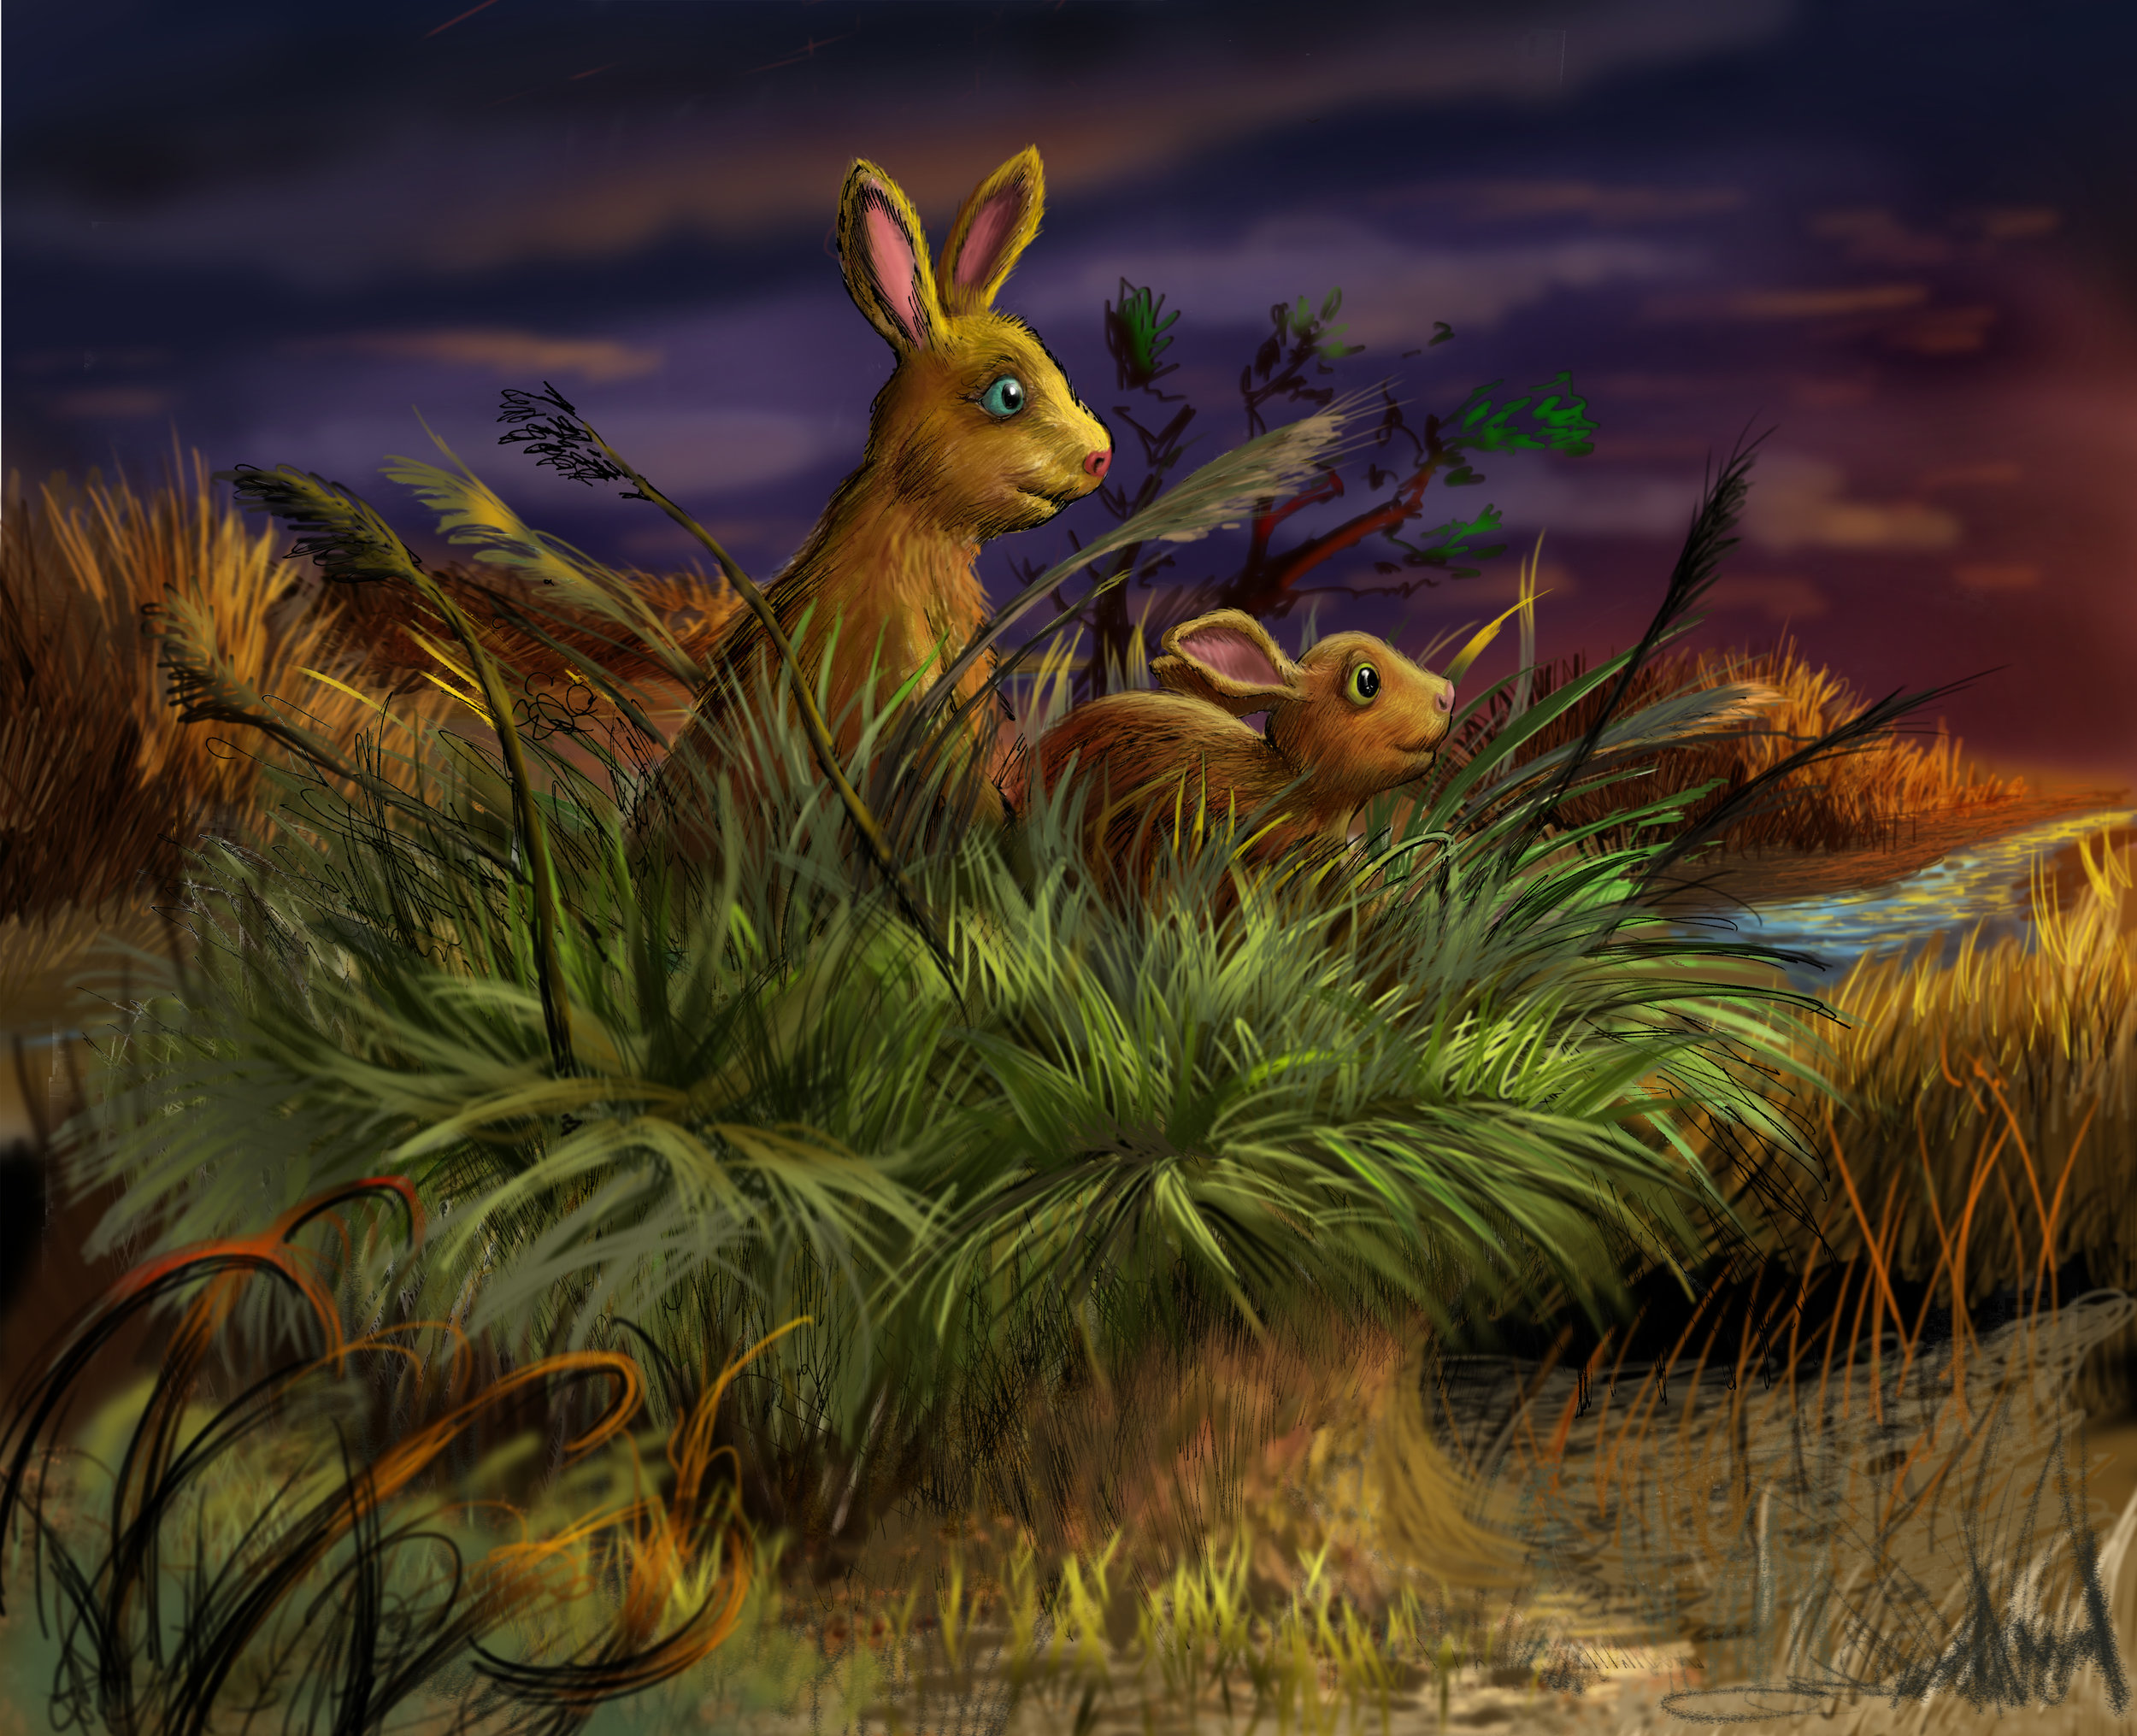 Rabbits - First painting - digital.jpg